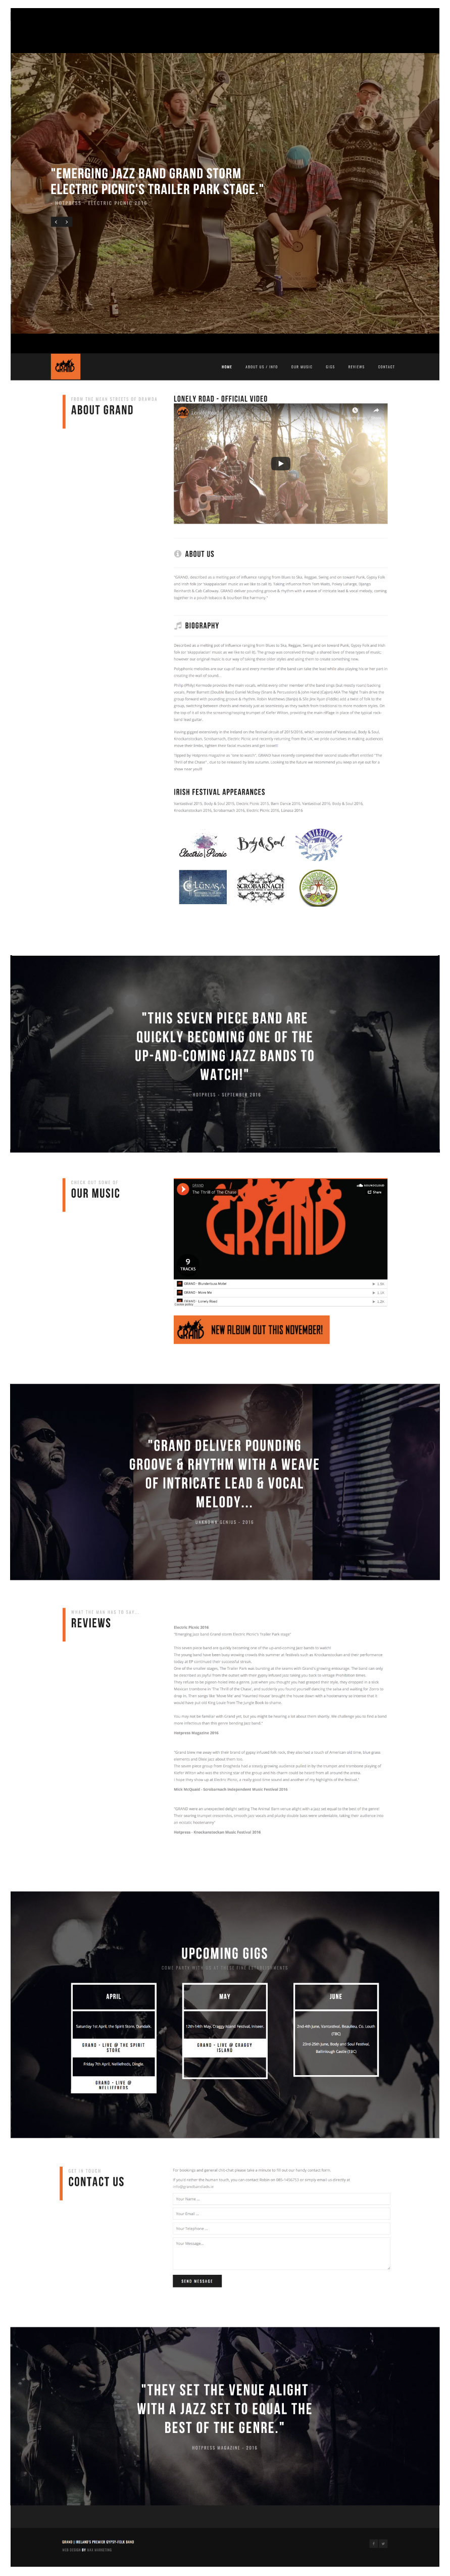 Cafe Studios Design - Homepage Preview _ Grand